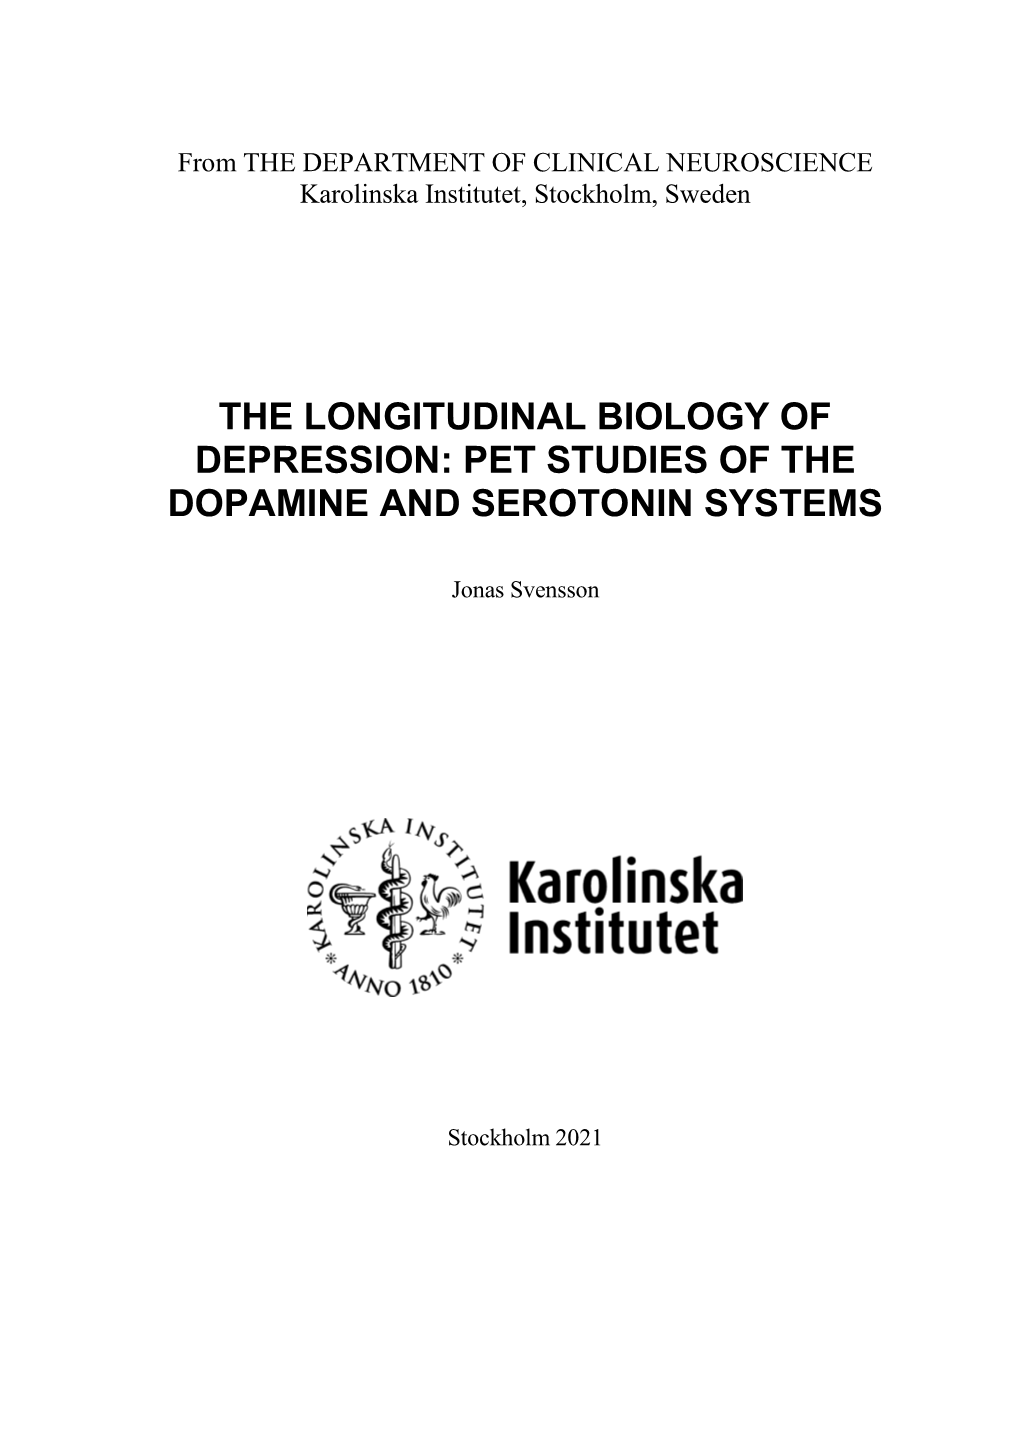 The Longitudinal Biology of Depression: Pet Studies of the Dopamine and Serotonin Systems